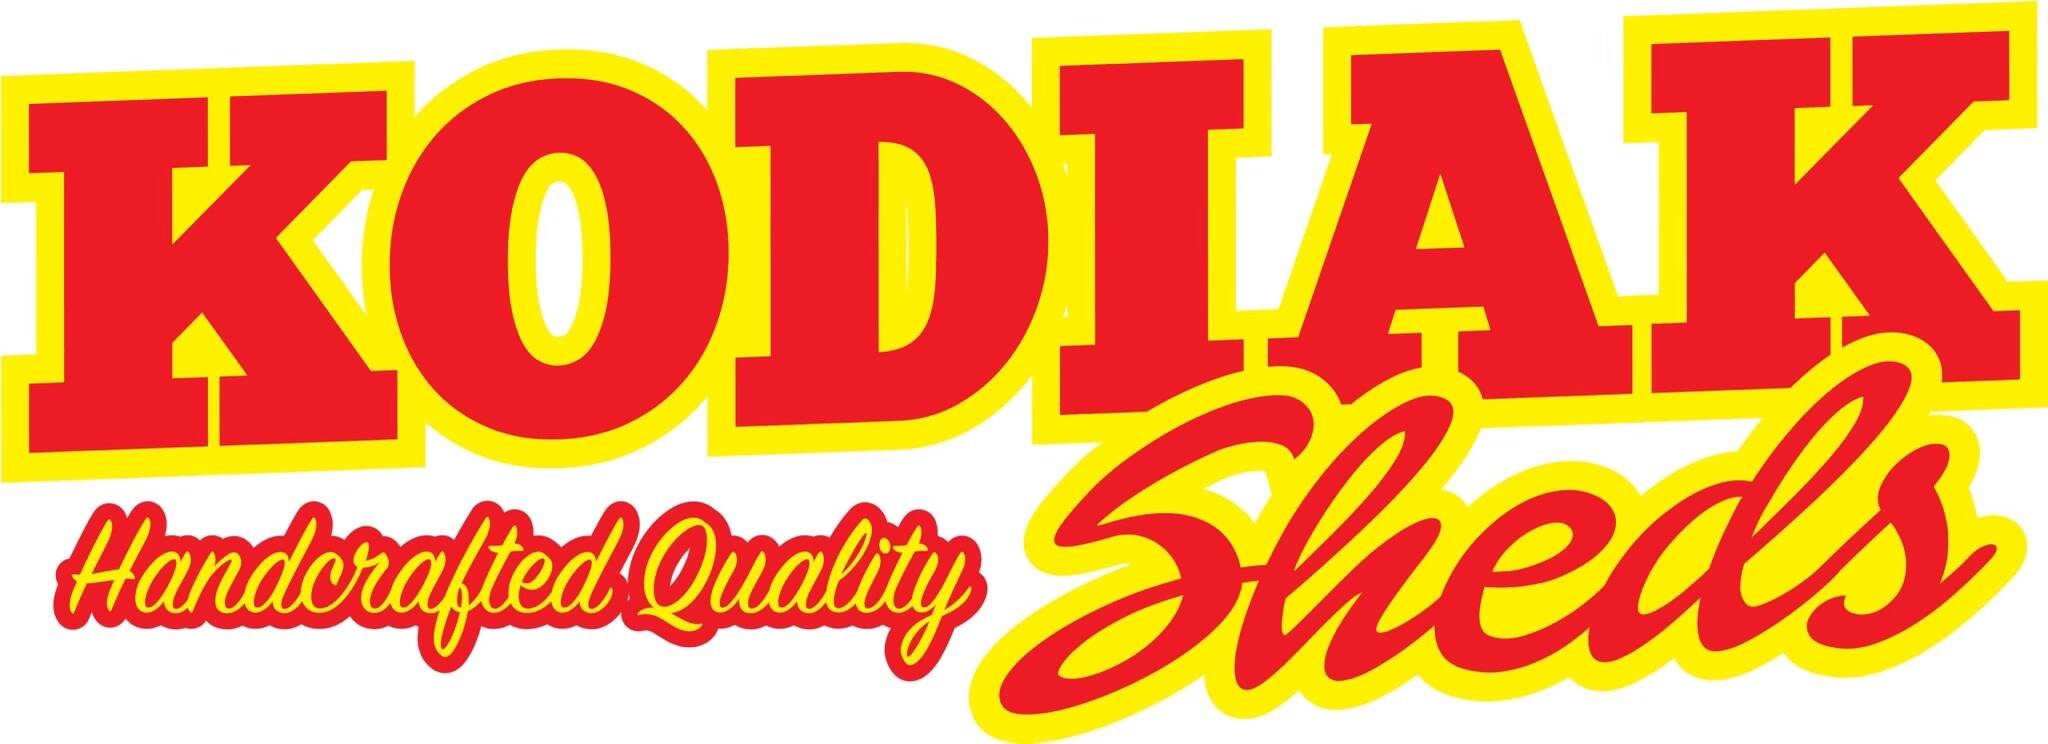 Kodiak Sheds